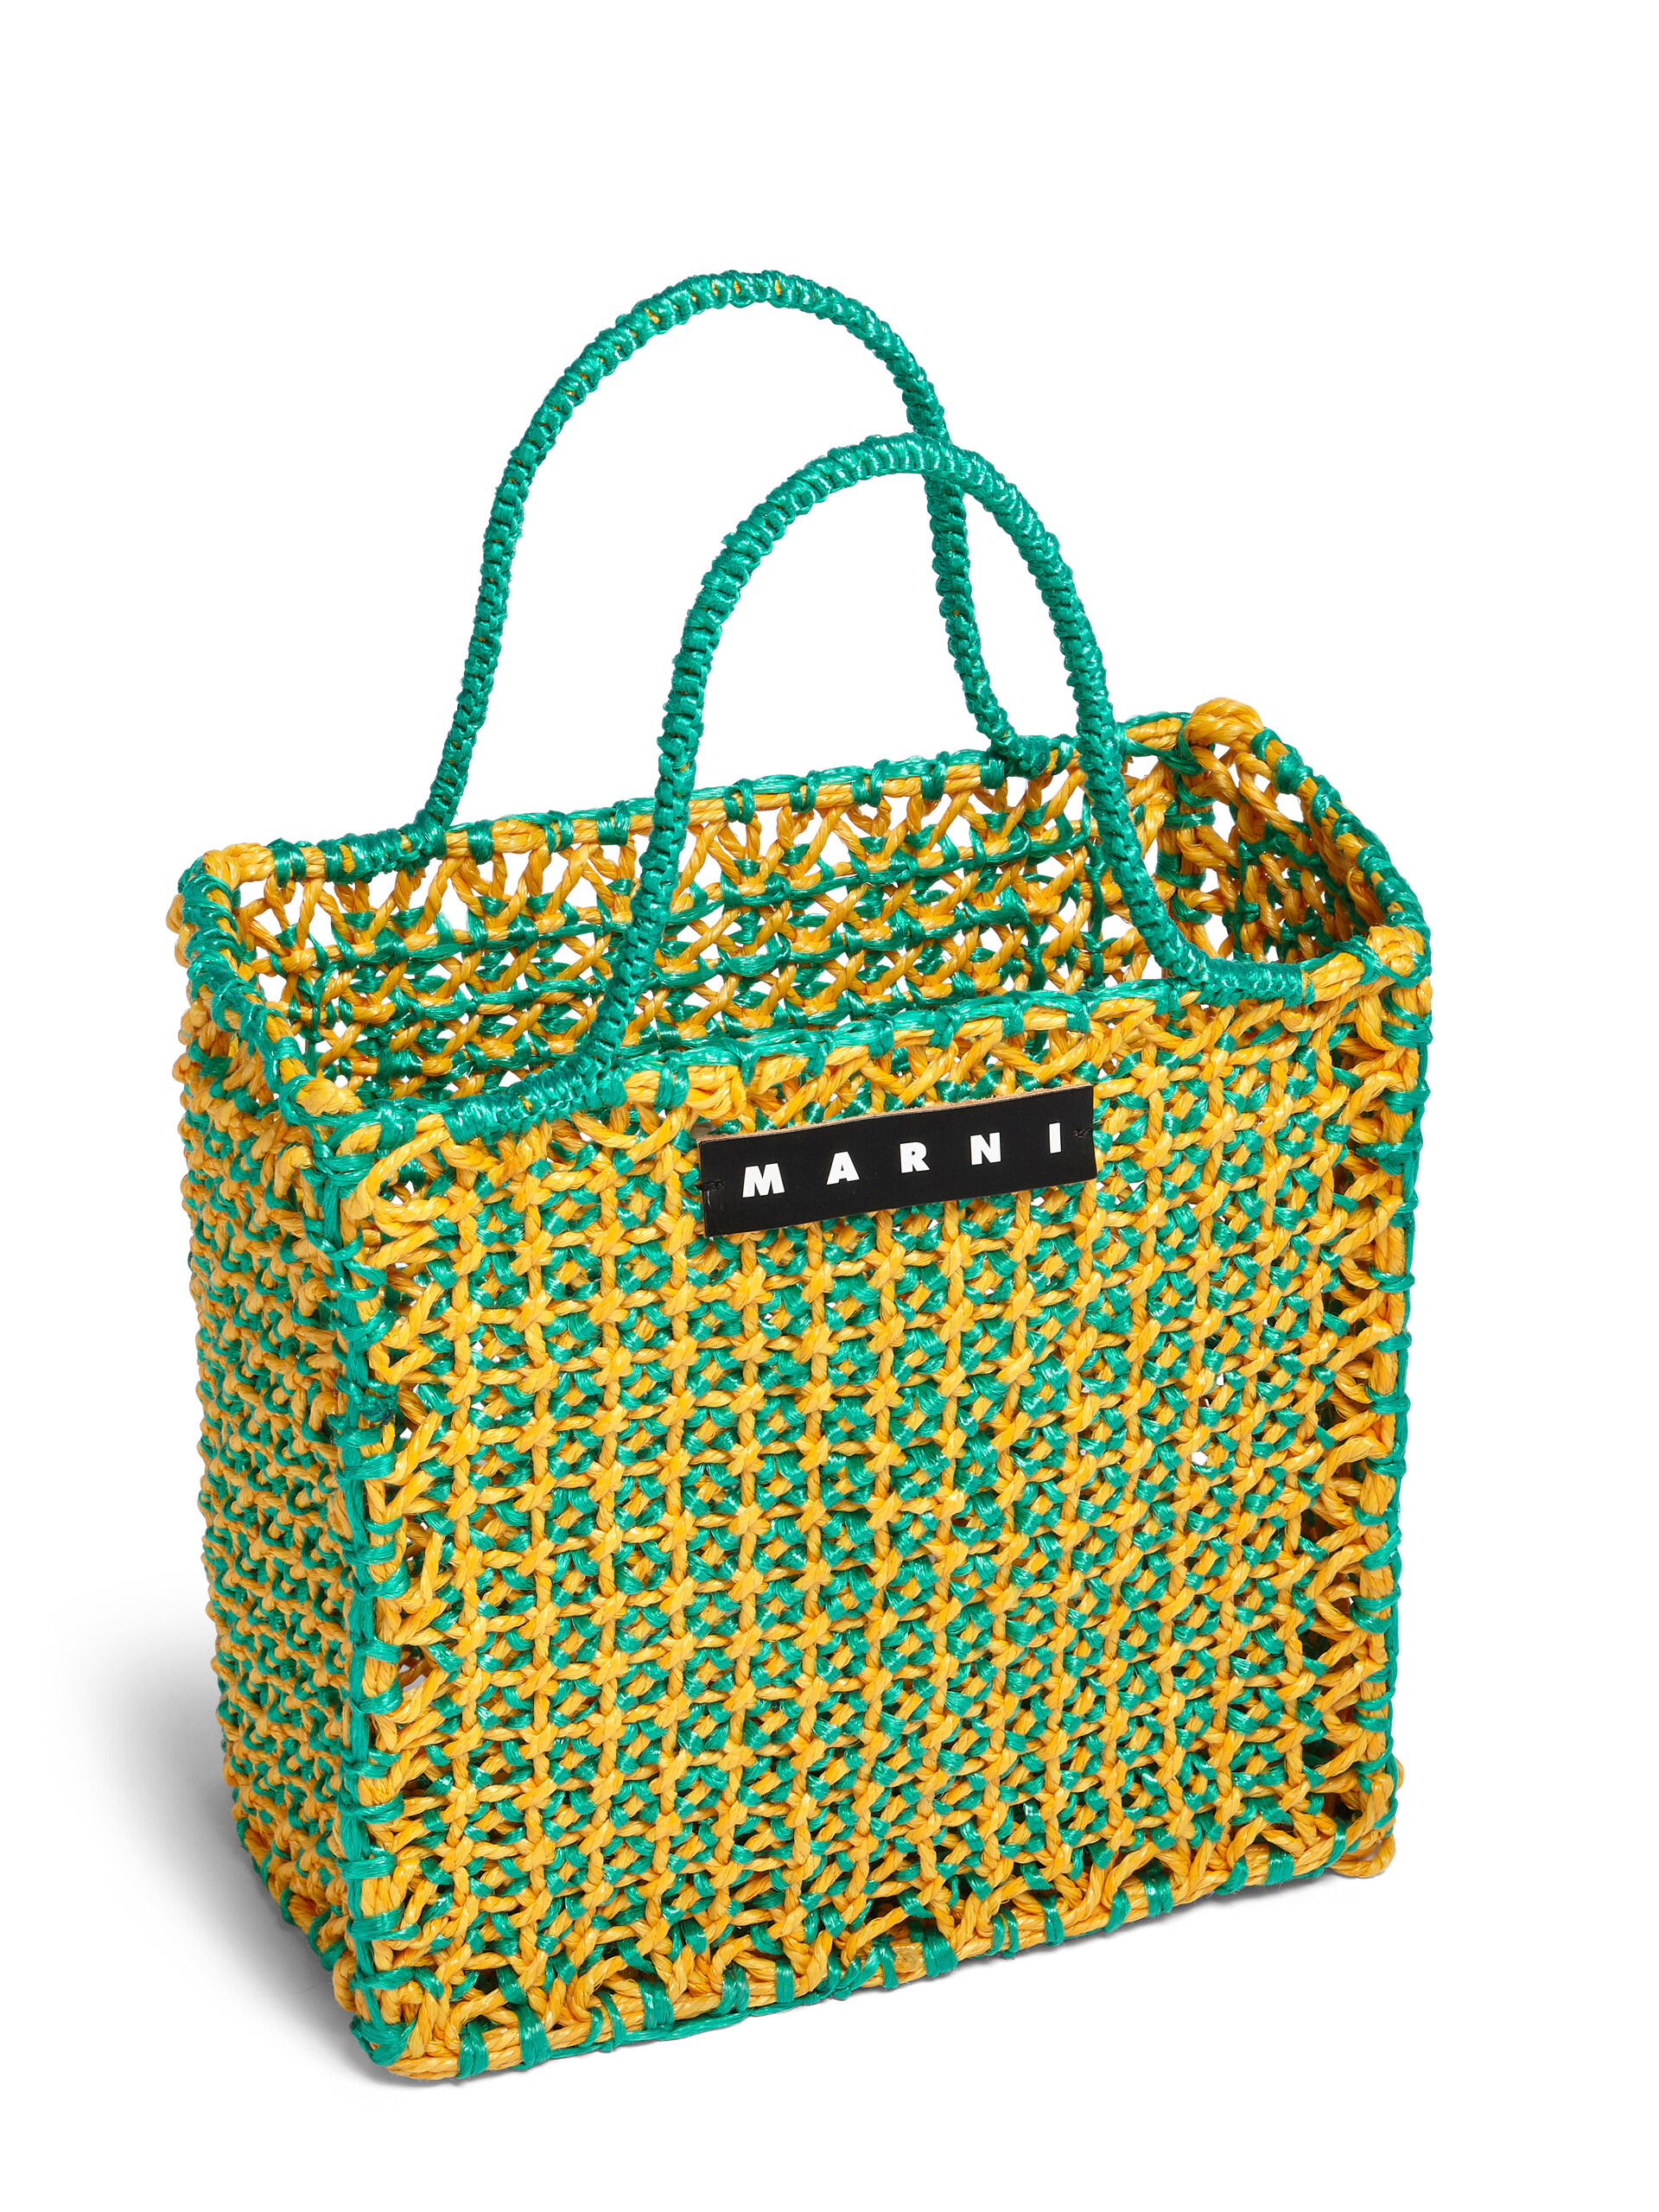 MARNI MARKET JURTA large bag in green and yellow crochet - Shopping Bags - Image 4